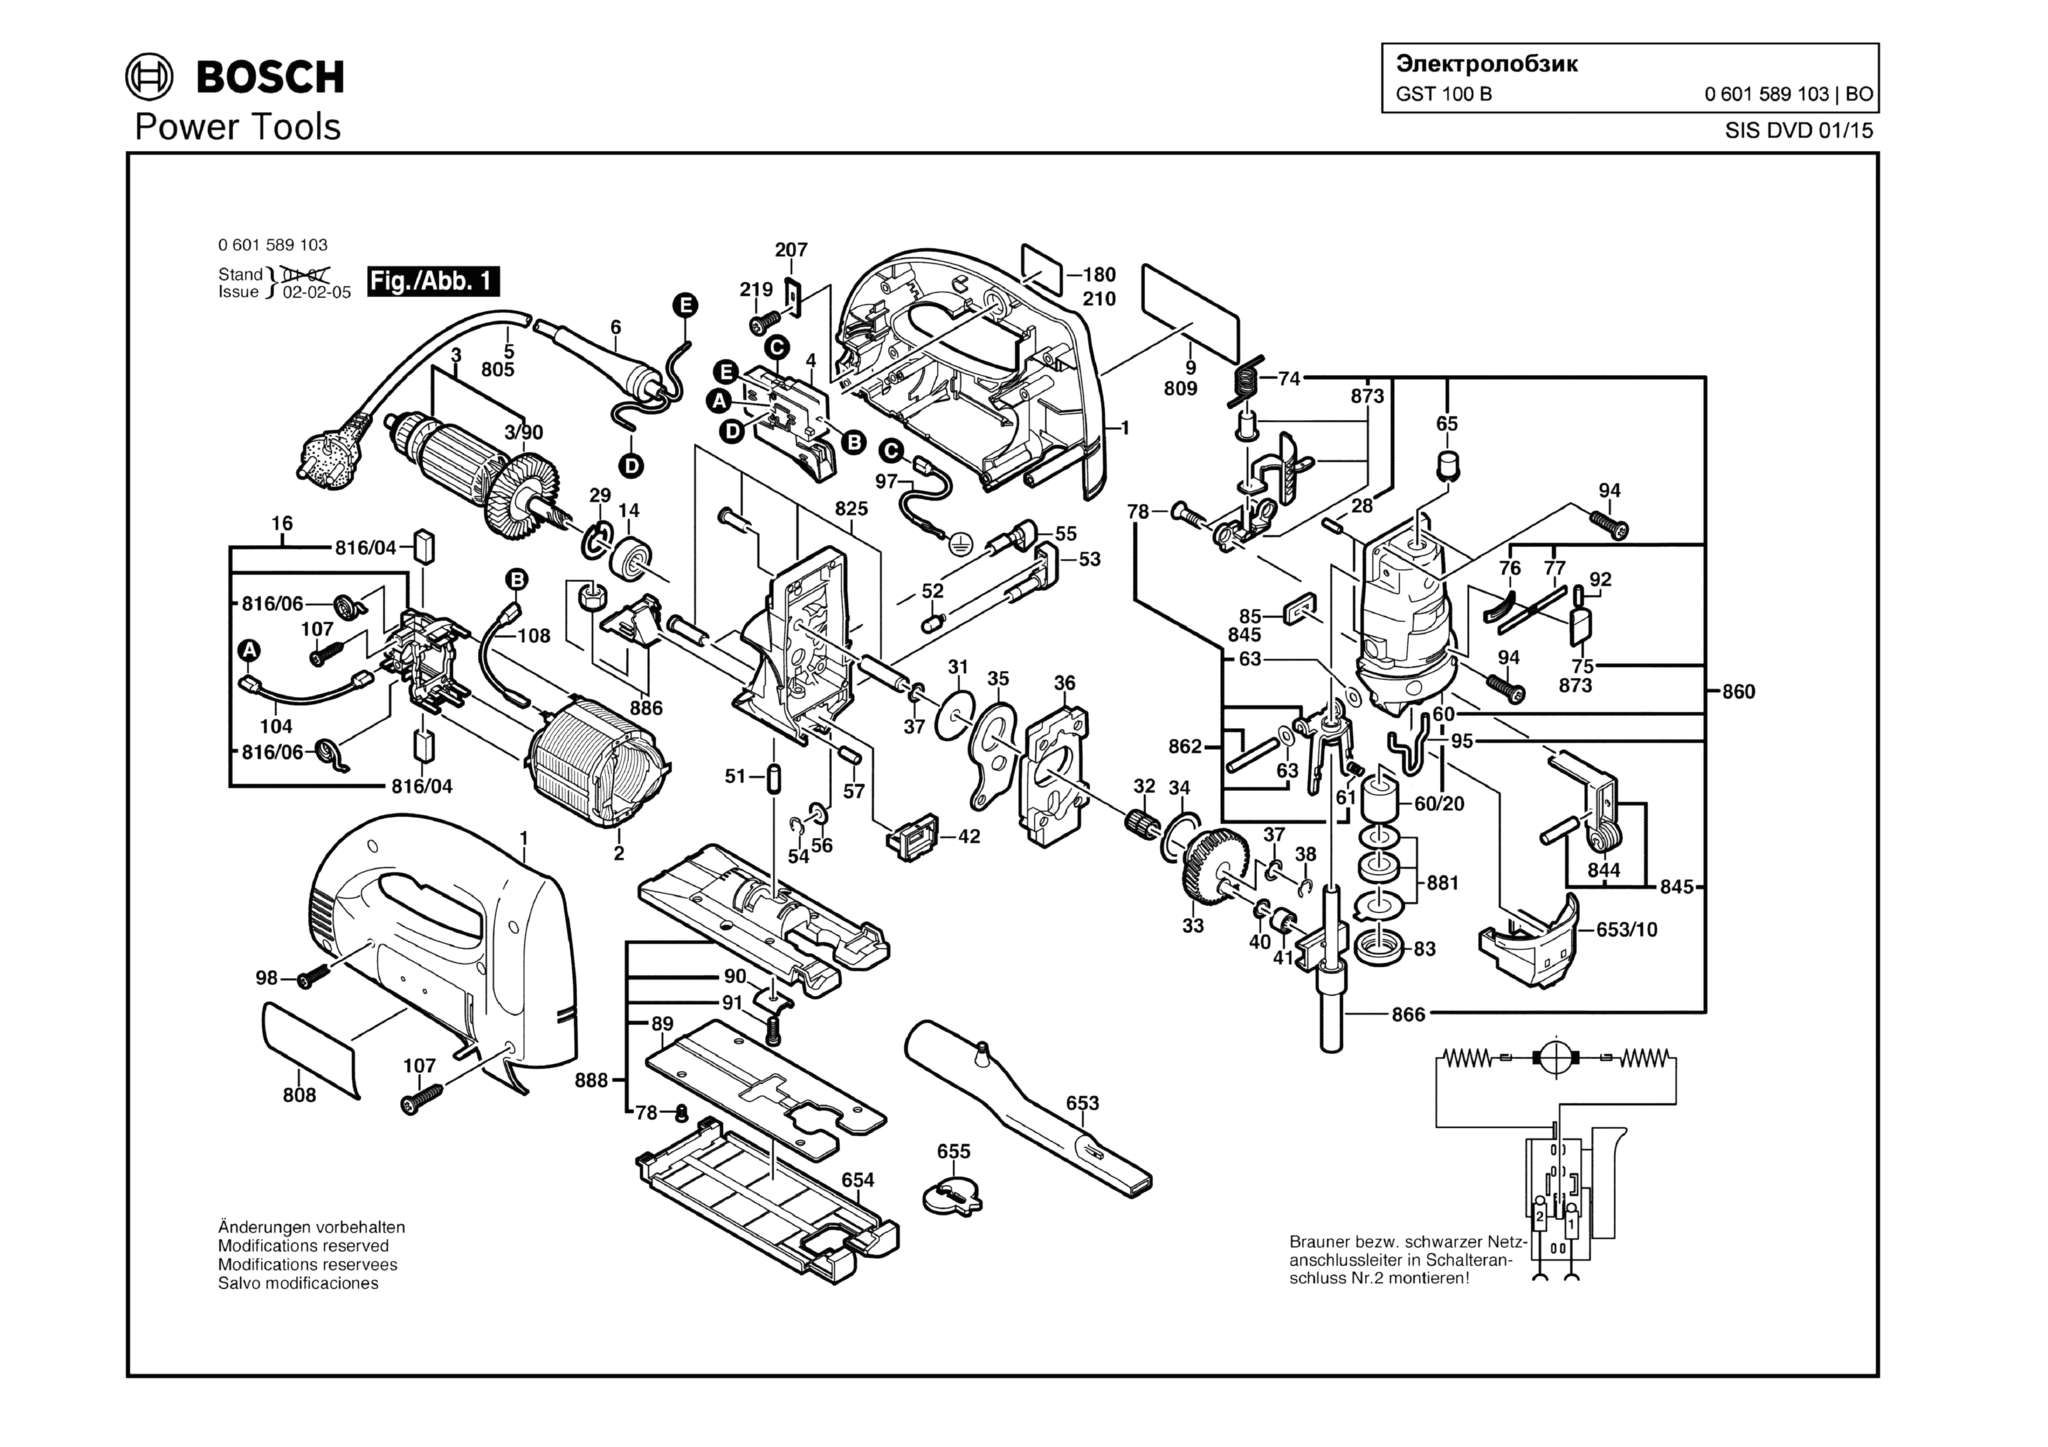 Запчасти, схема и деталировка Bosch GST 100 B (ТИП 0601589103)